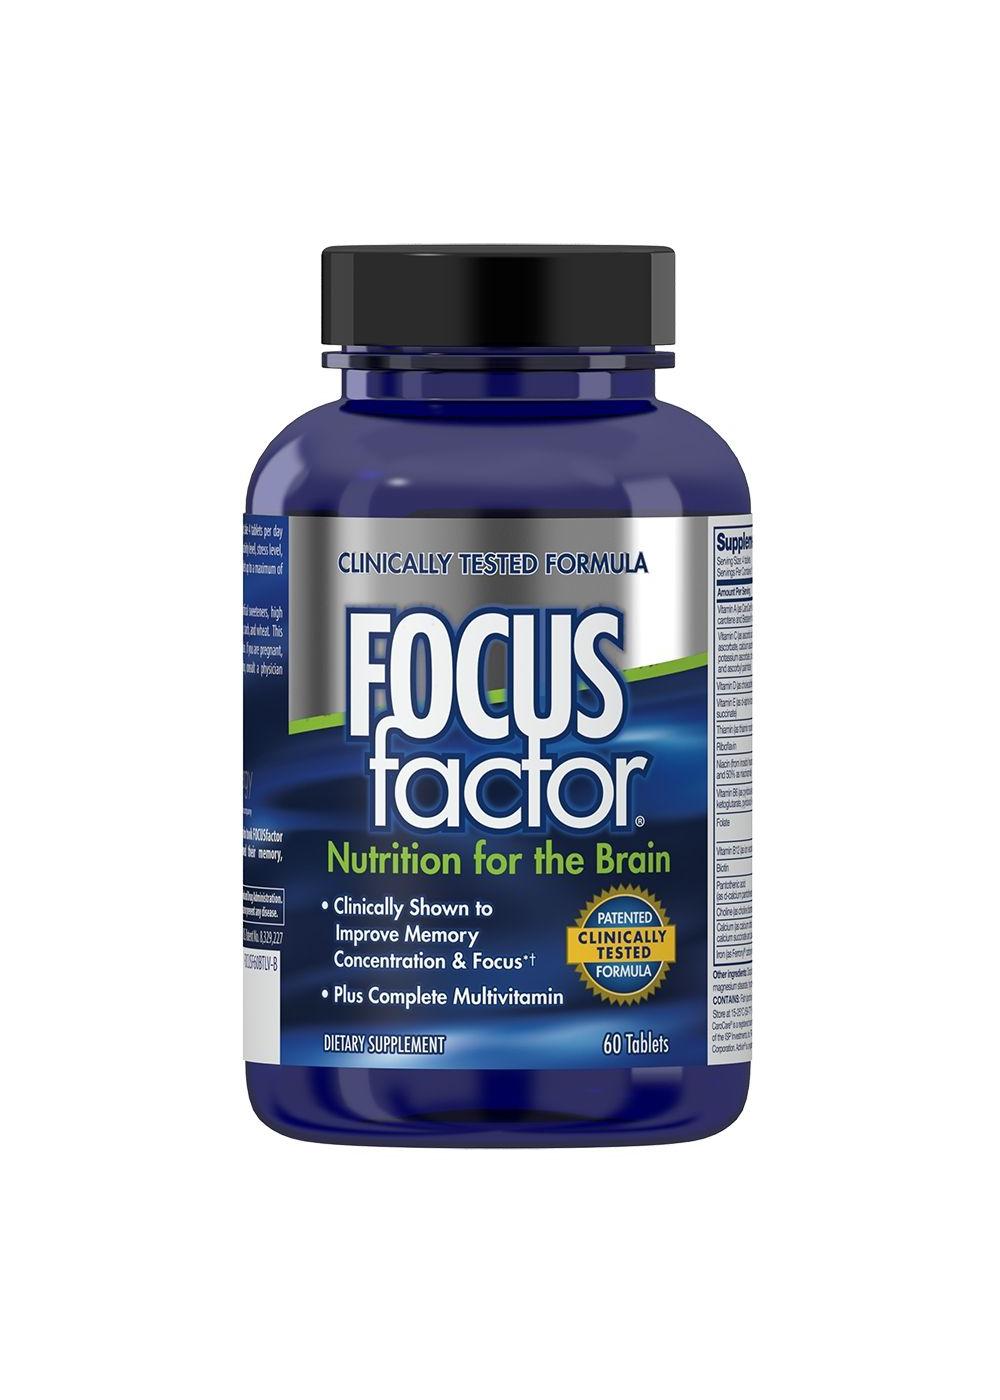 Focus Factor Brain Supplement & Complete Multivitamin; image 1 of 5